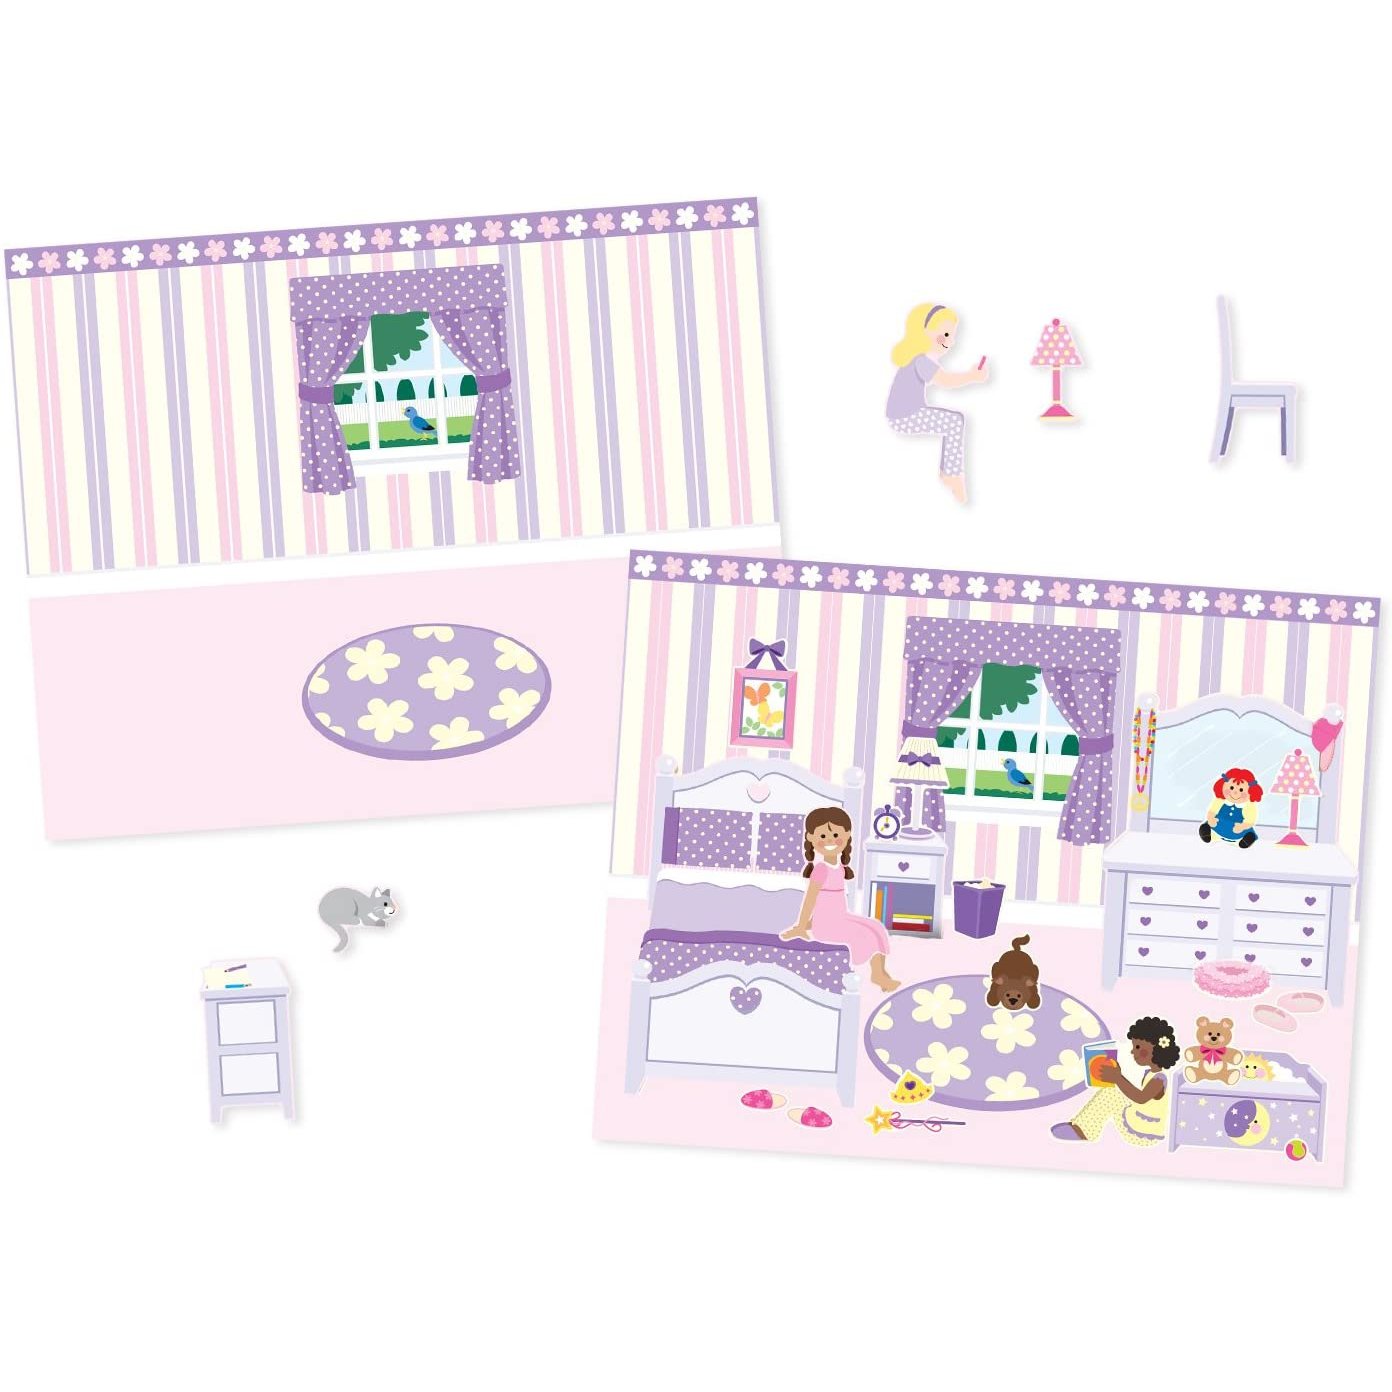 Melissa & Doug Reusable Sticker Pad - Play House!-MELISSA & DOUG-Little Giant Kidz